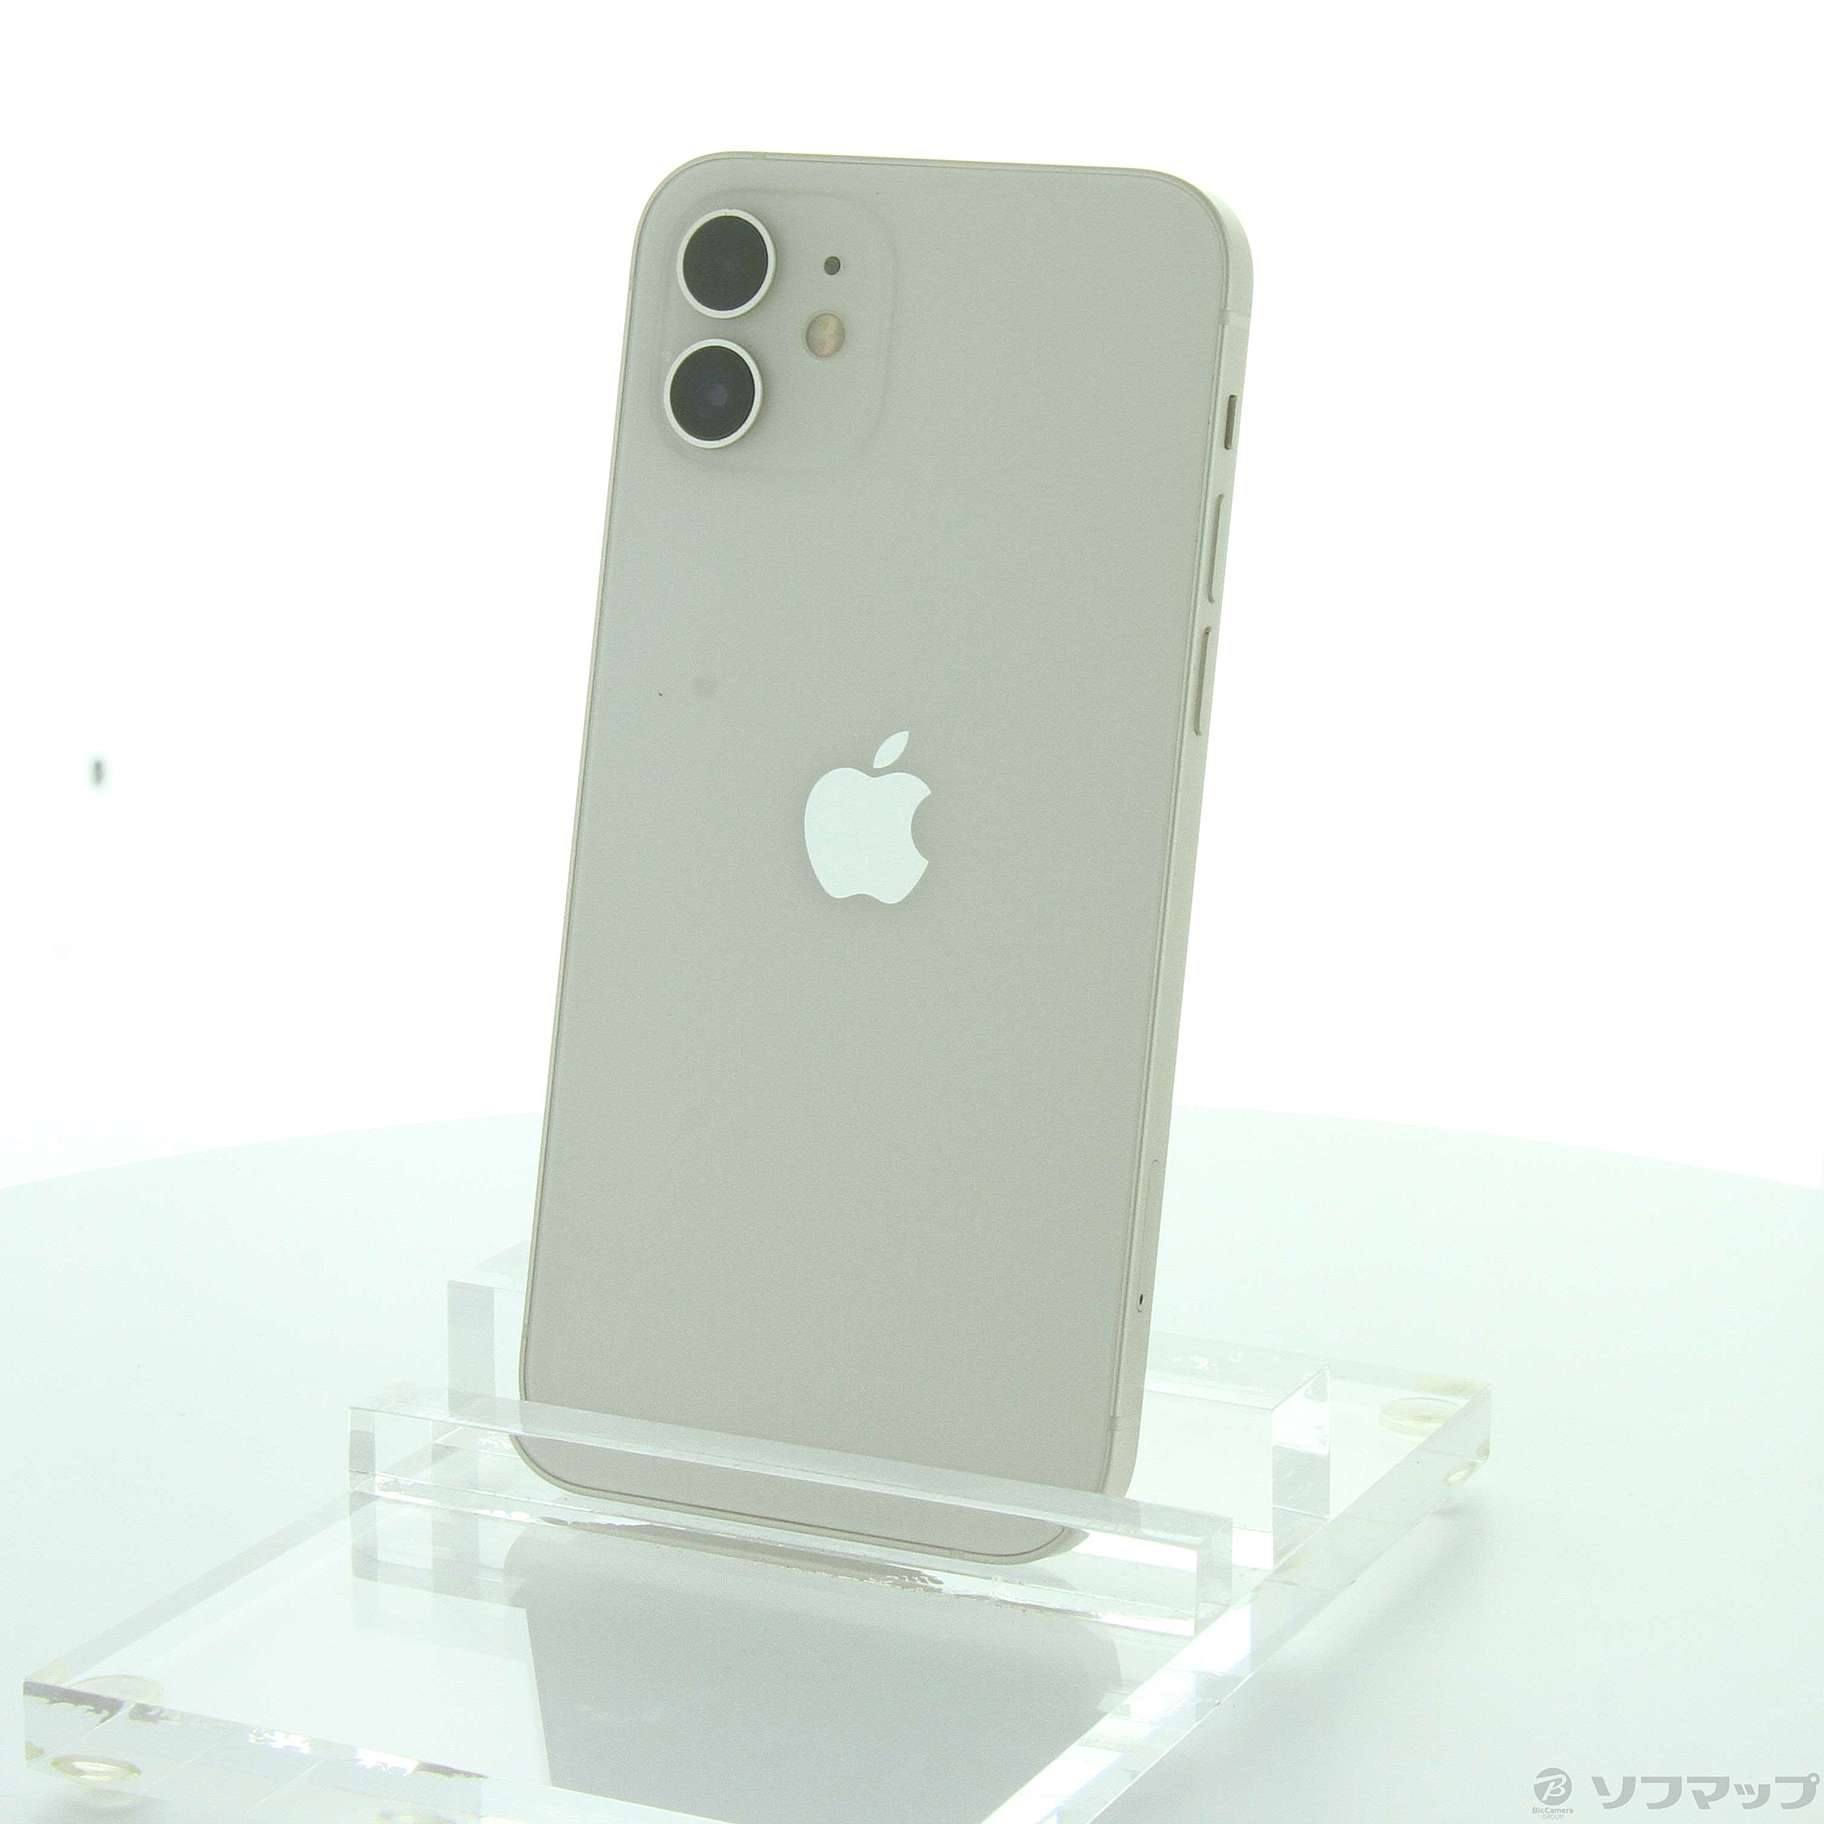 iPhone12 64GB ホワイト SIMフリー Apple